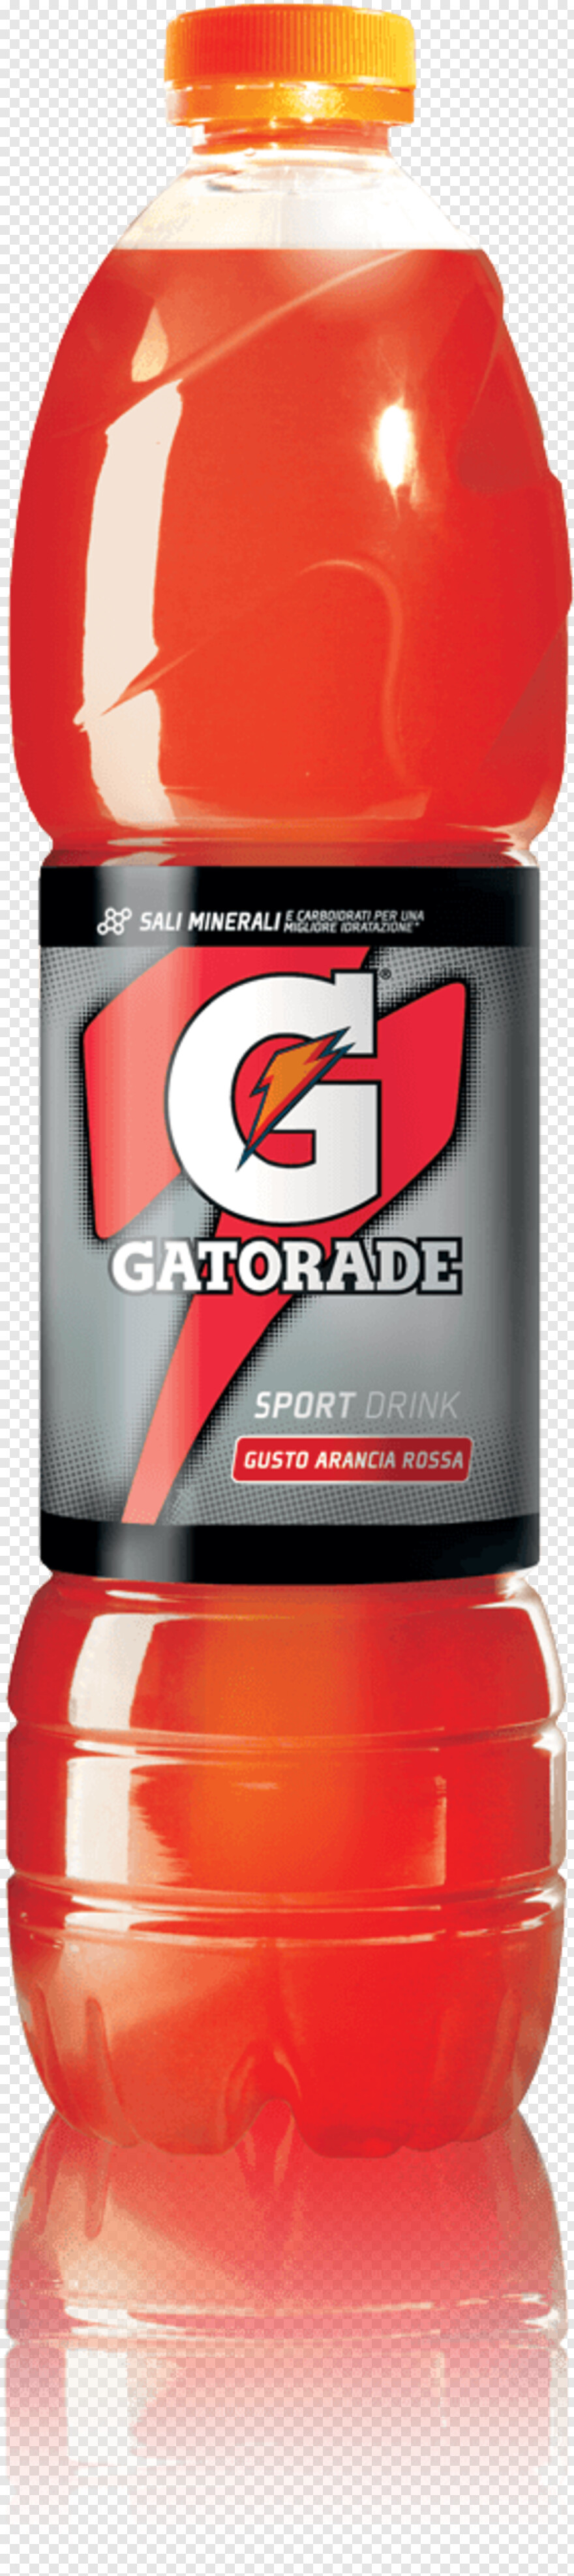 gatorade-bottle # 326119